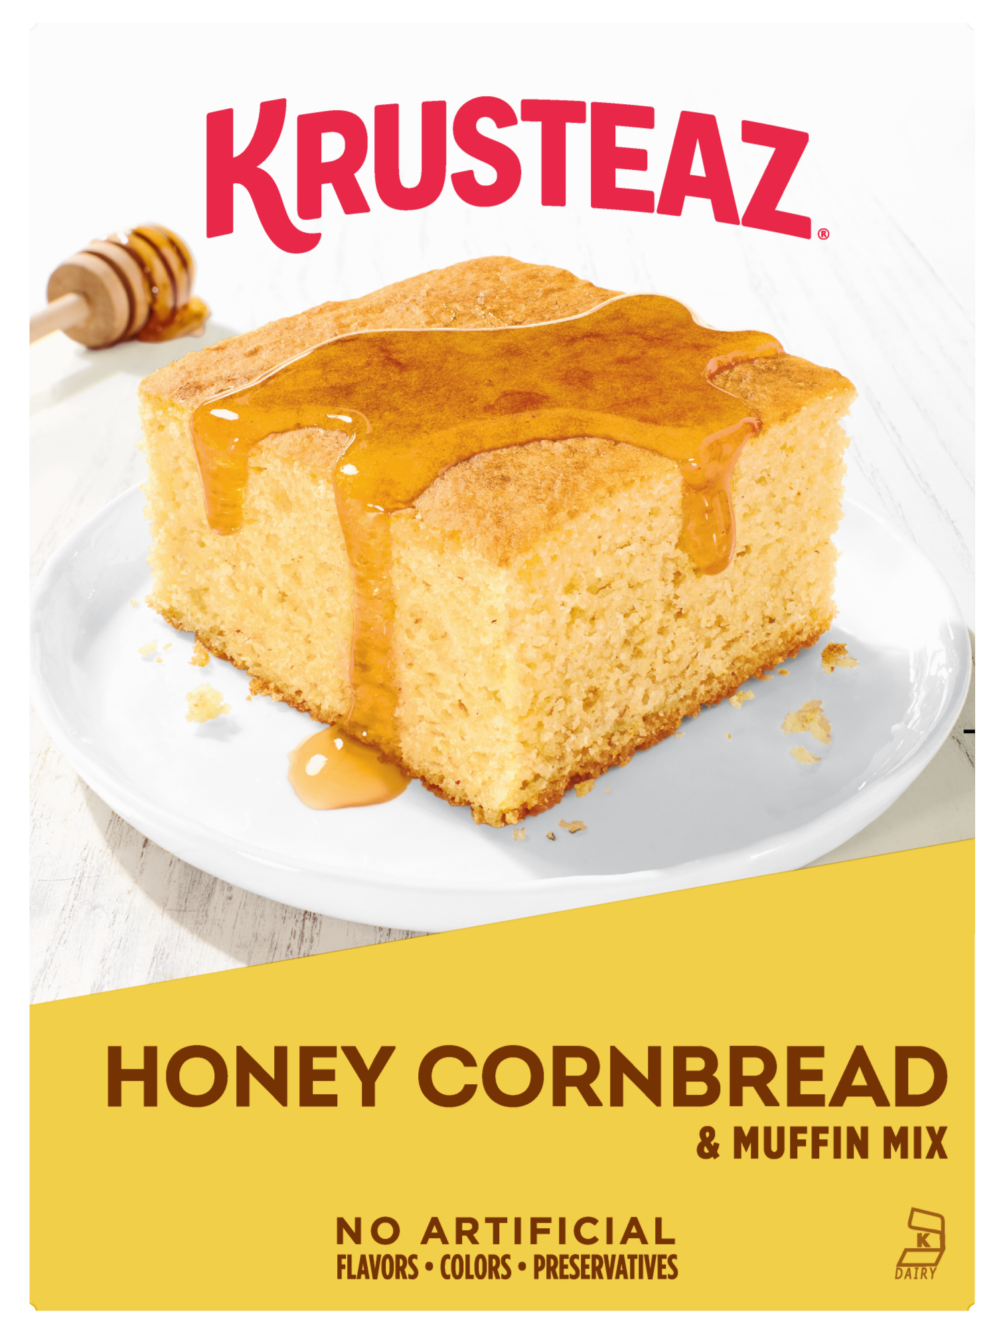 Box of Krusteaz Honey Cornbread and Muffin Mix.